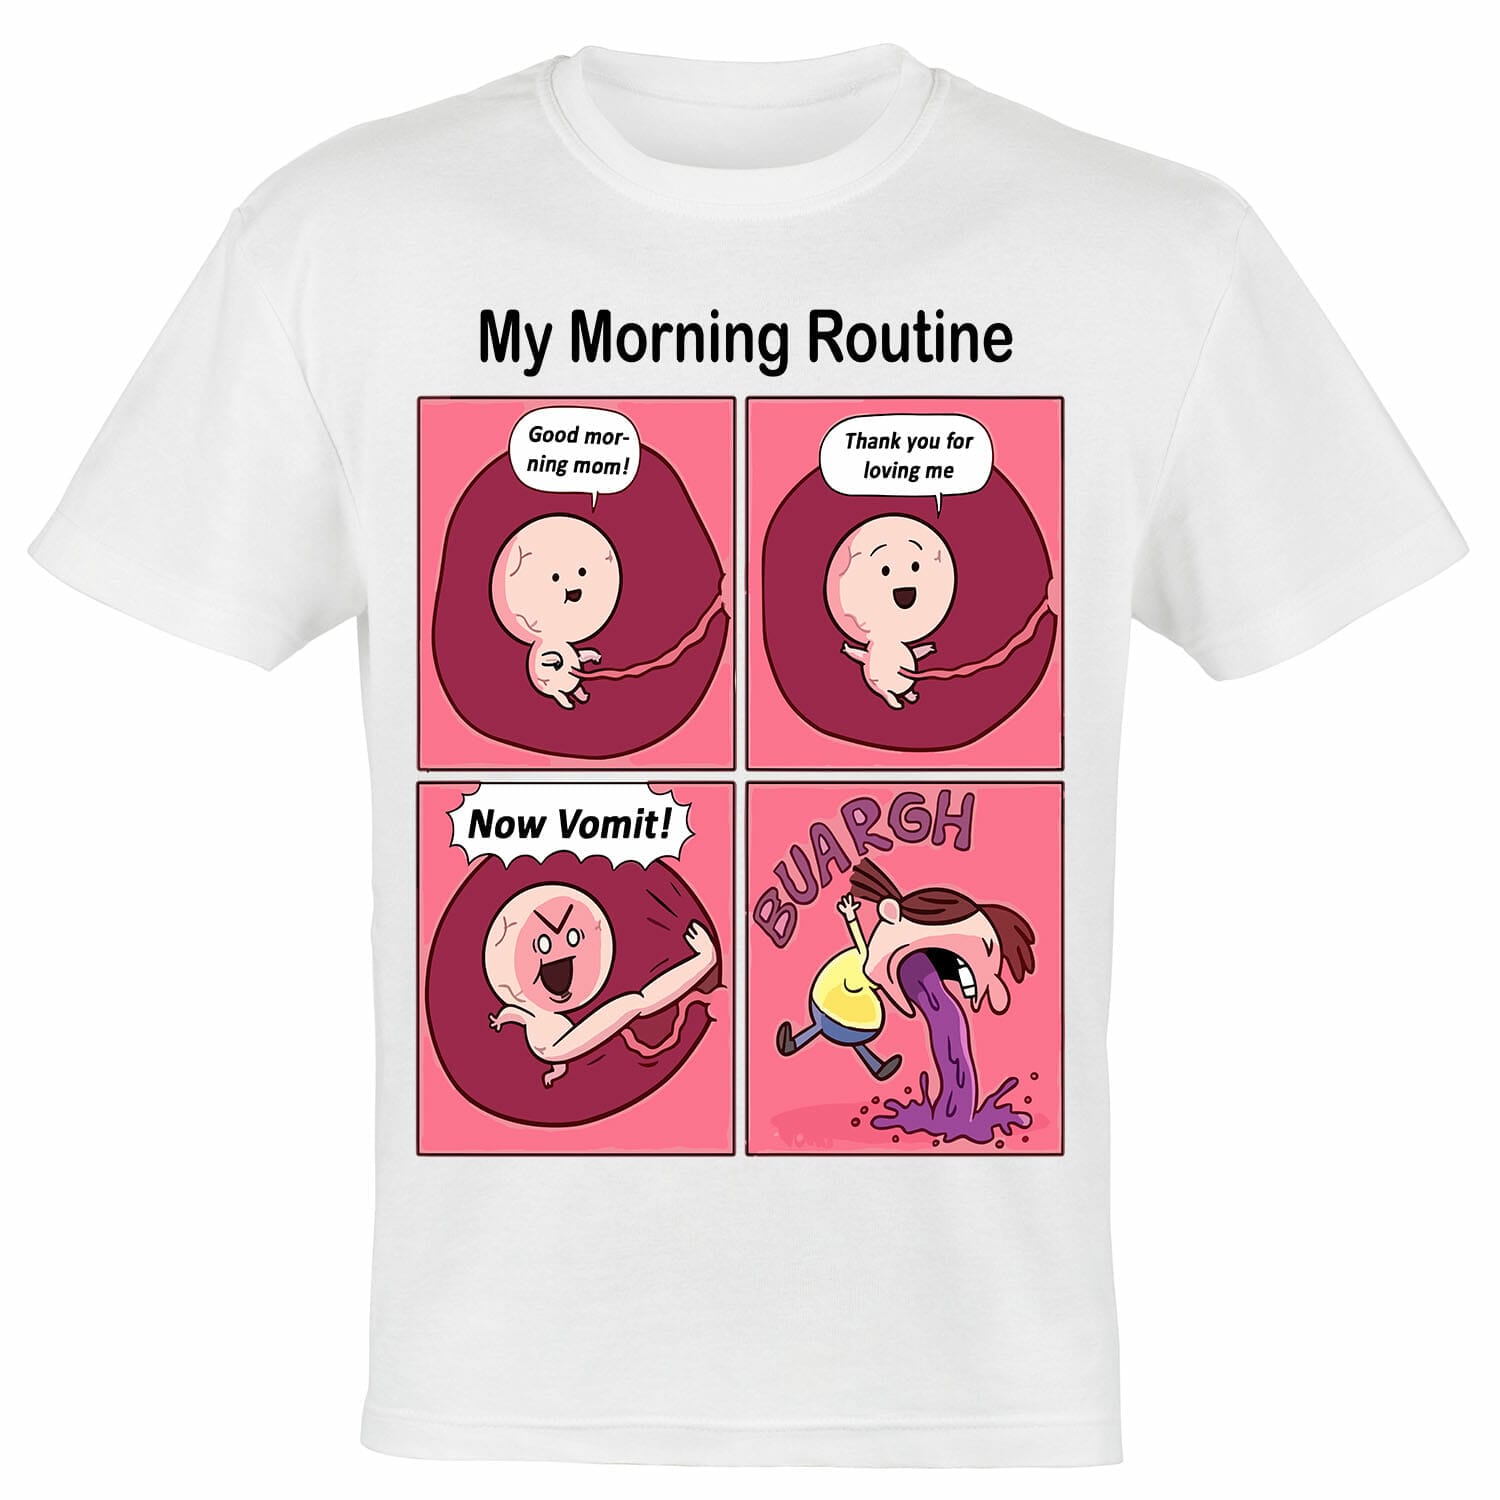 expectant mom's tshirt design